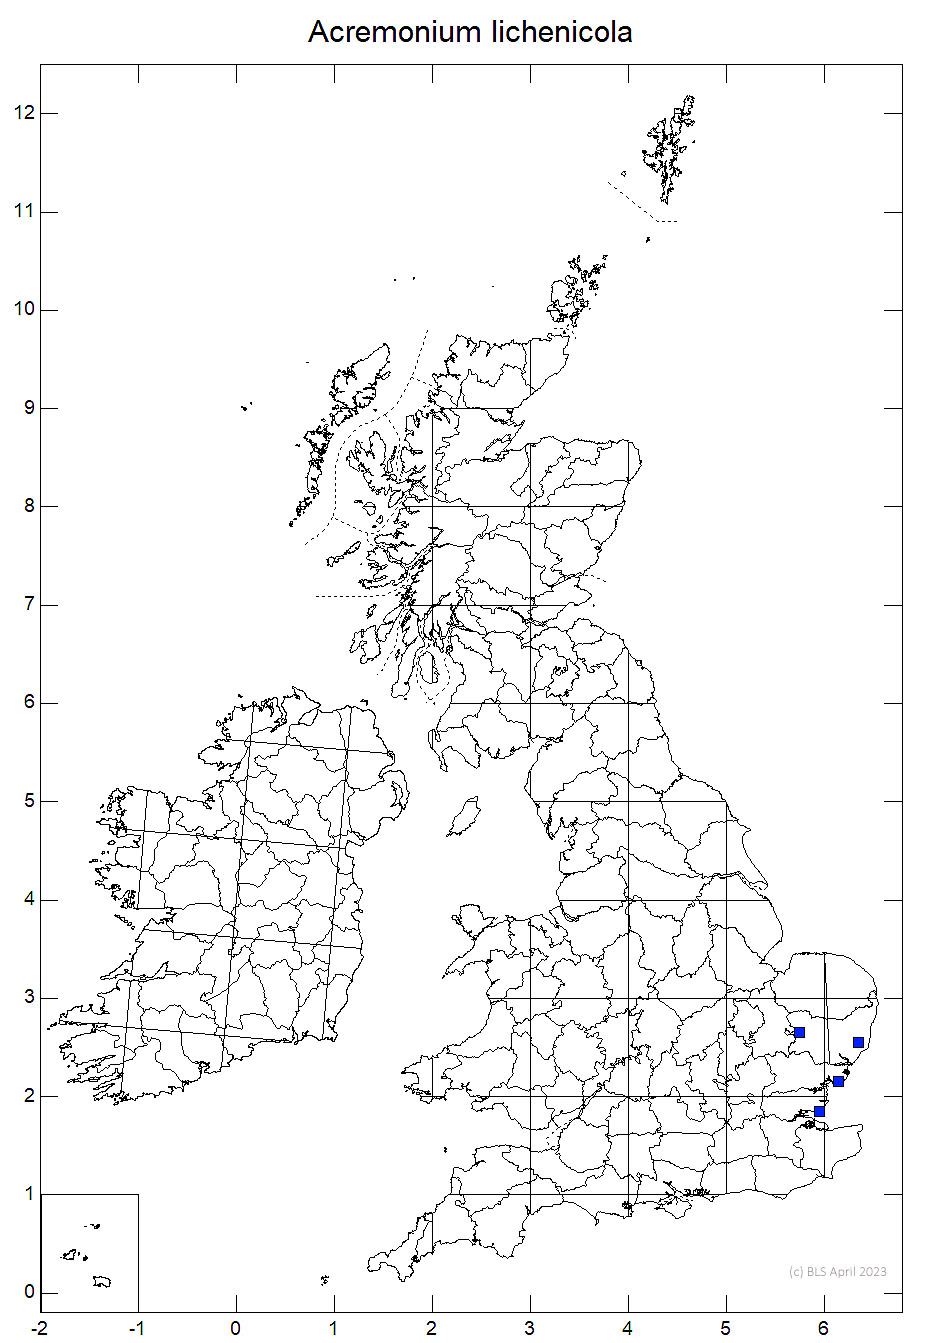 Acremonium lichenicola 10km sq distribution map